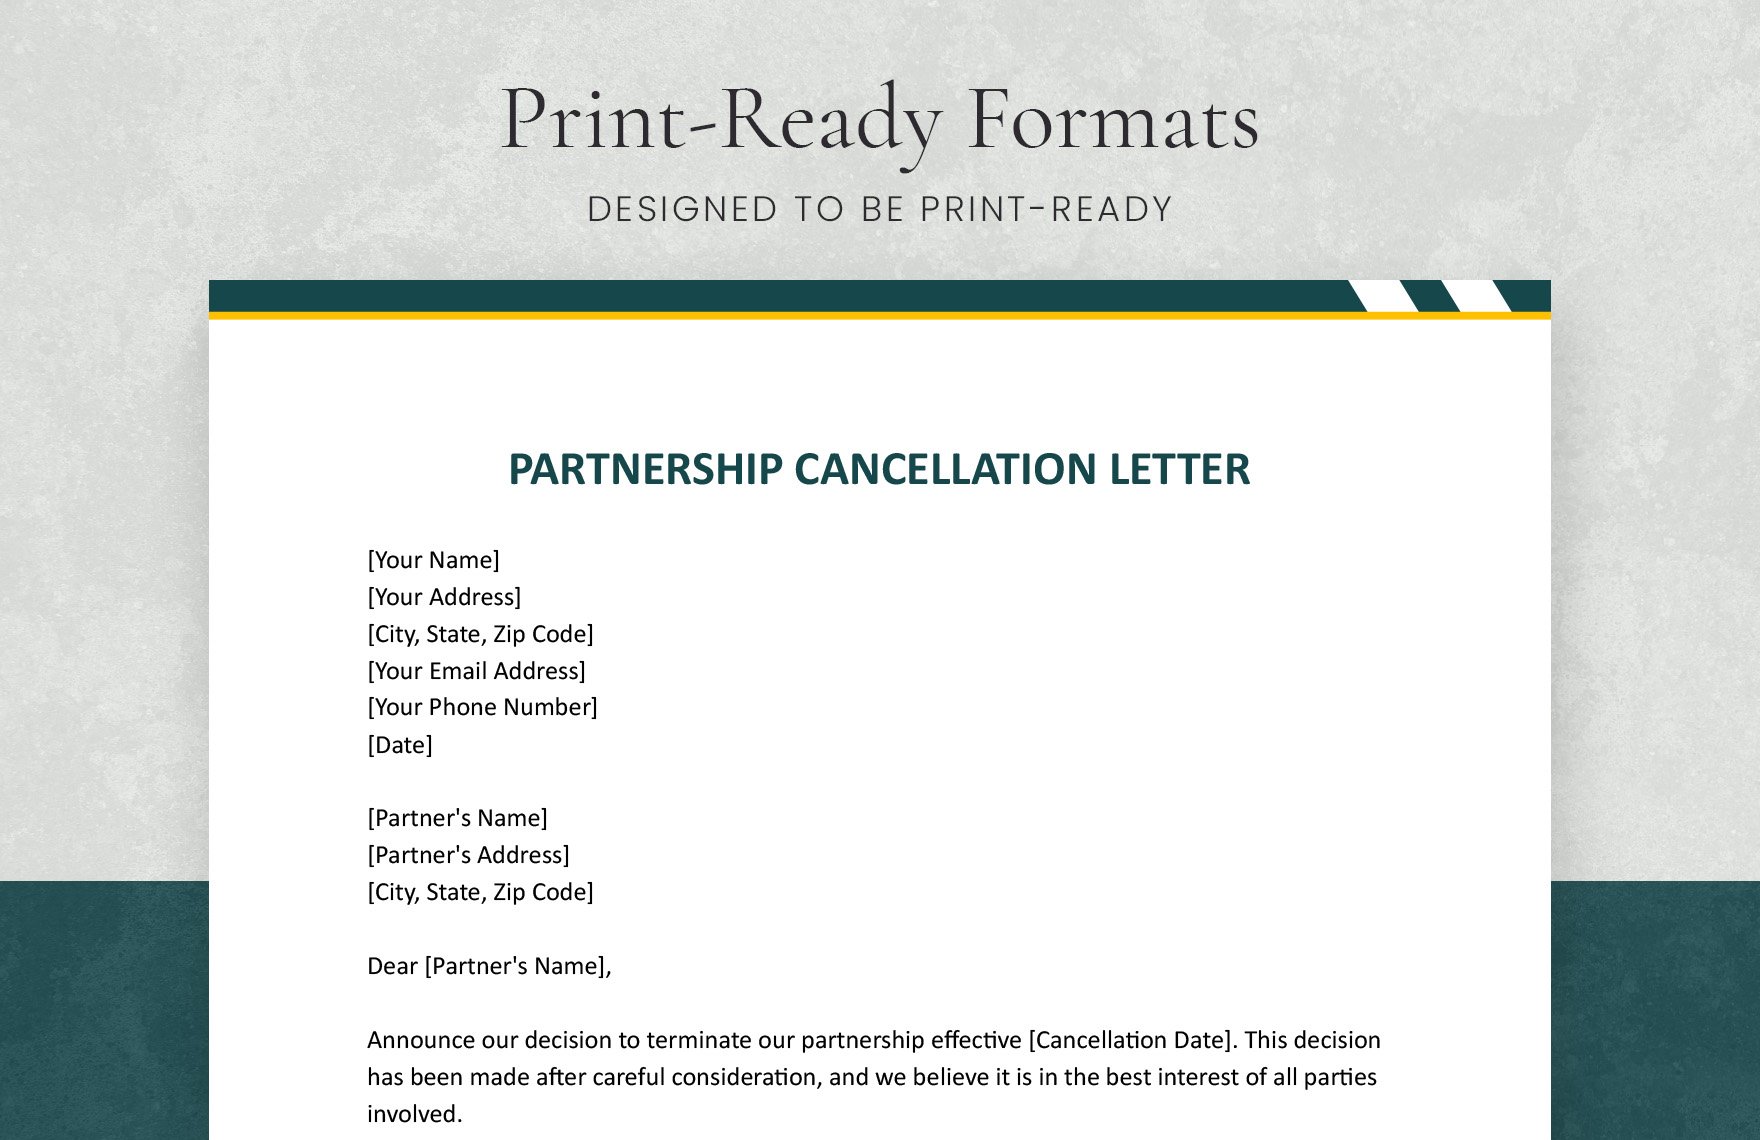 Partnership Cancellation Letter